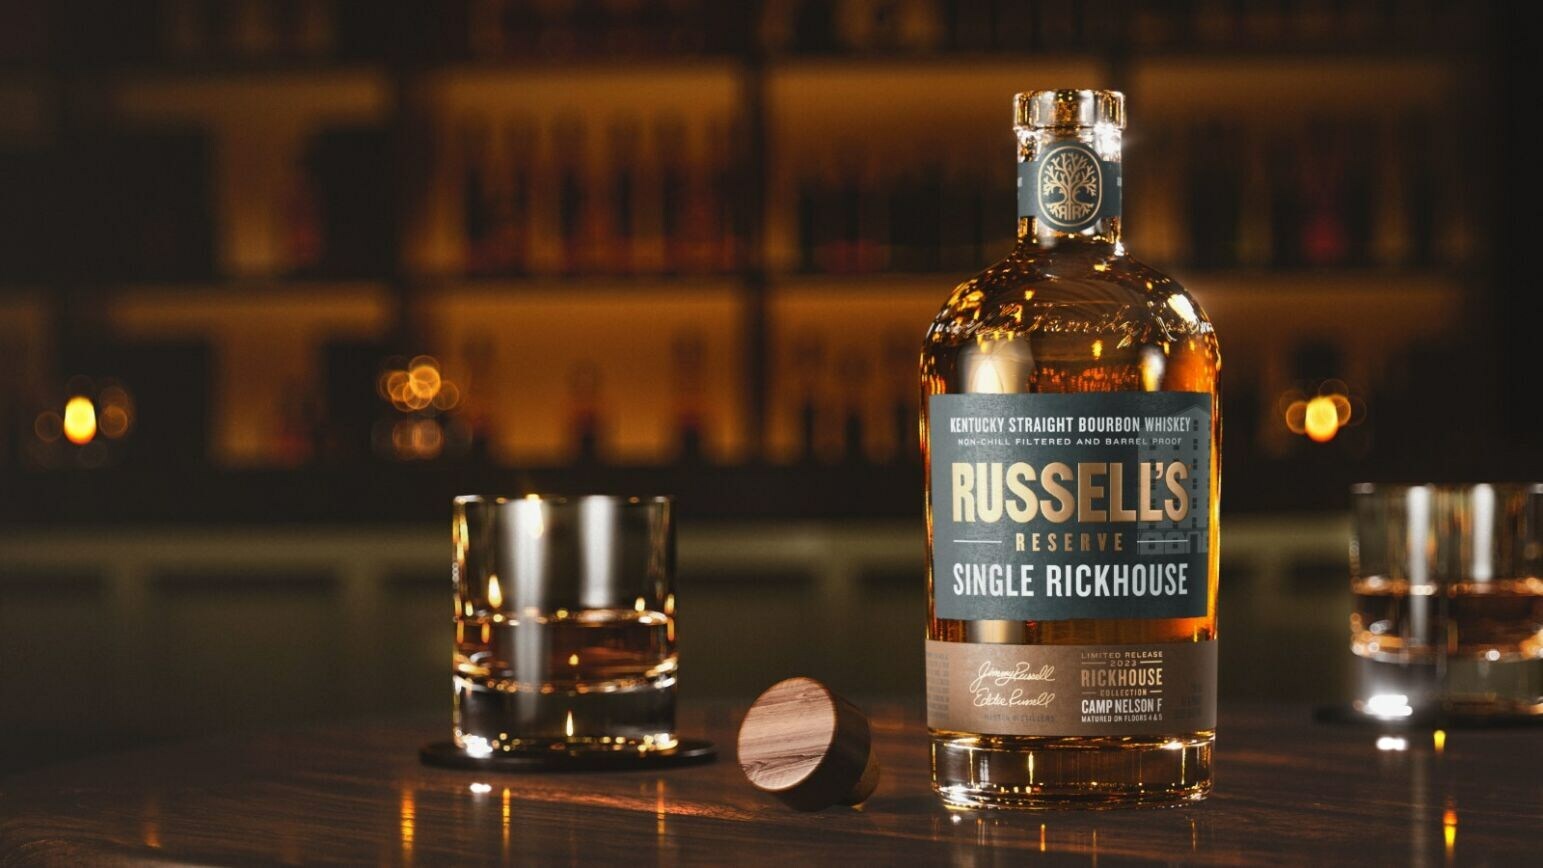 A bottle of Kentucky Bourbon from Wild Turkey Distillery on a bar with glassware.